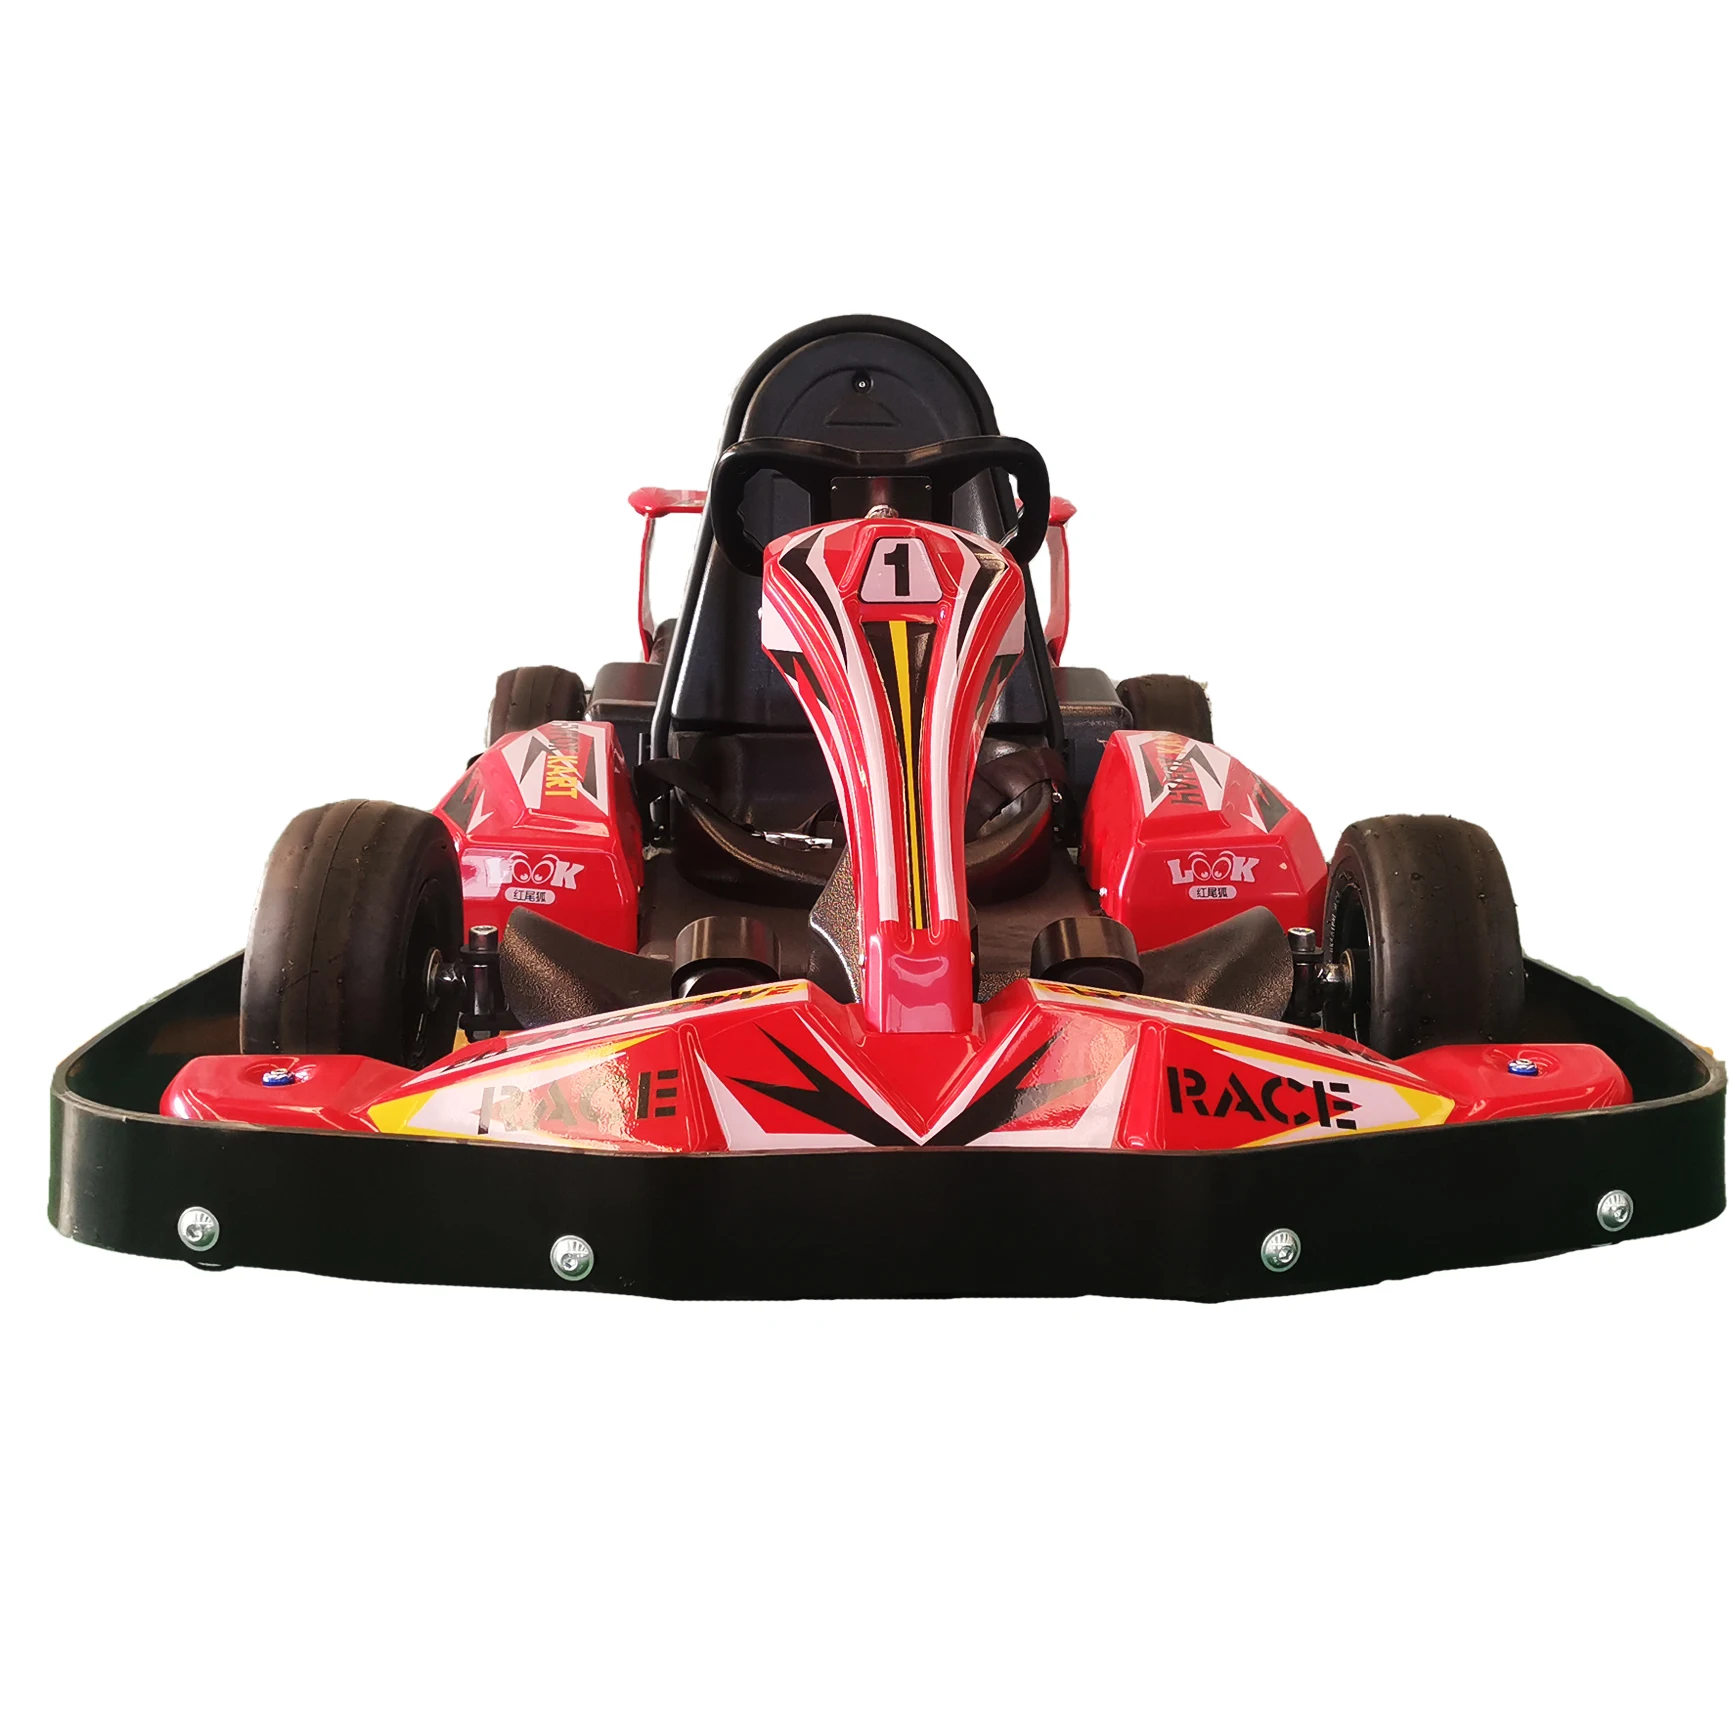 Challenge Sport HVFOX Brand go cart kids go kart racing for sale